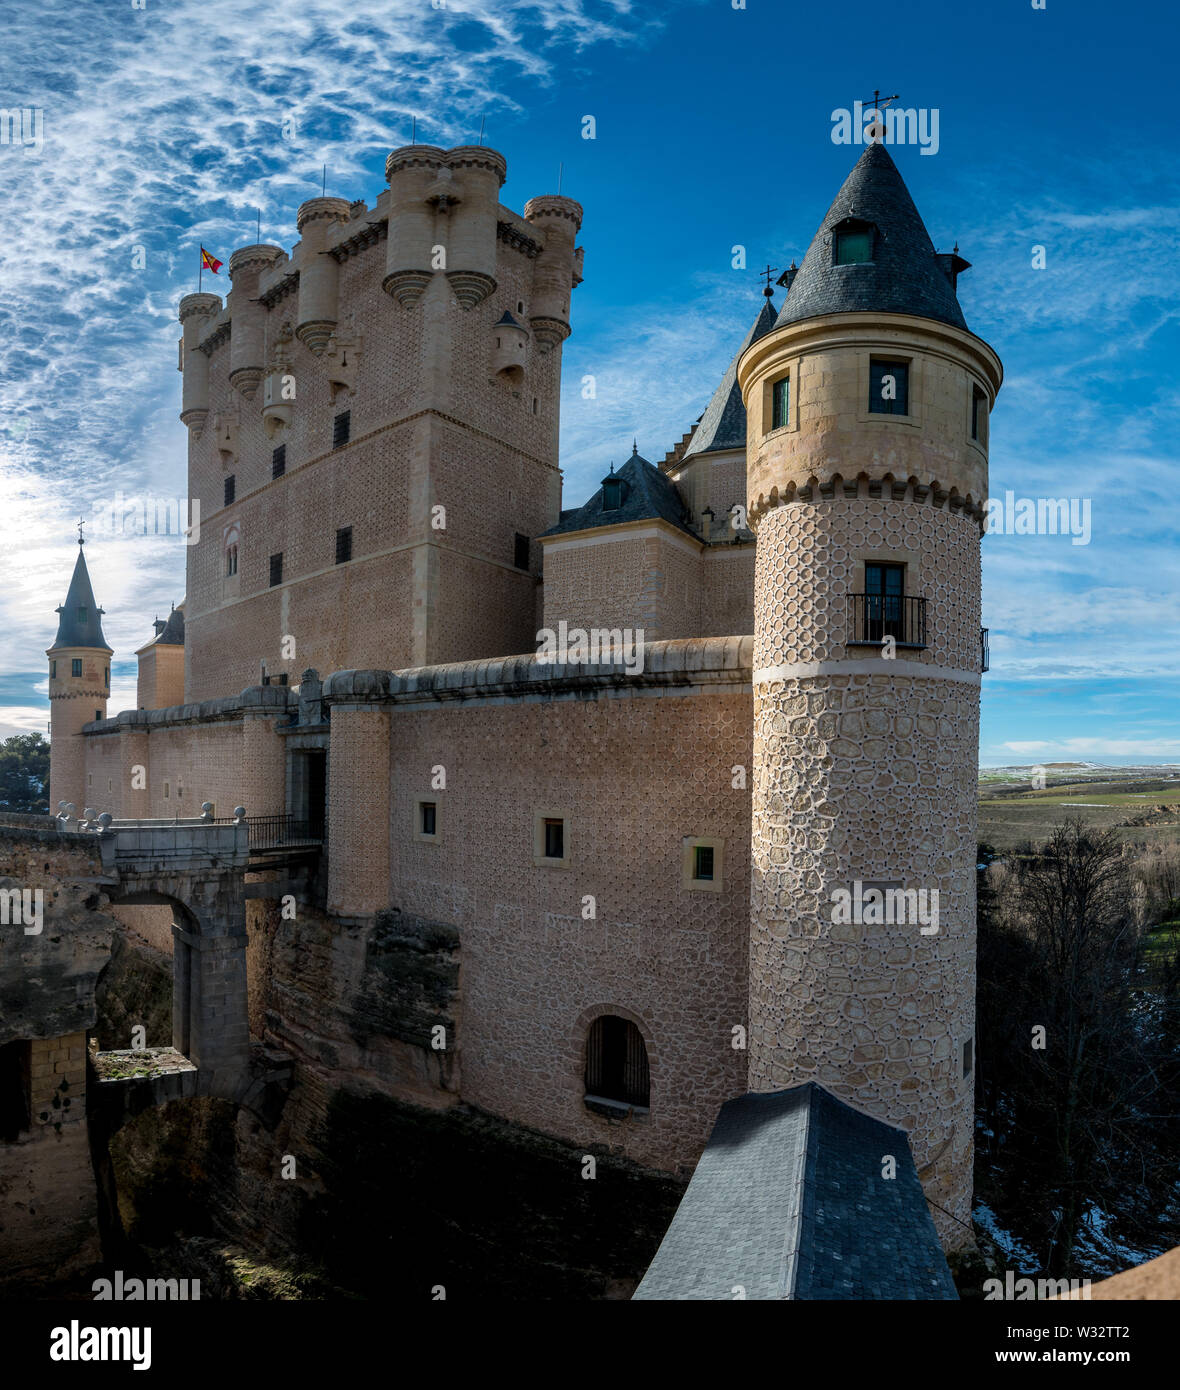 Die alcazar von Segovia, Spanien Stockfoto